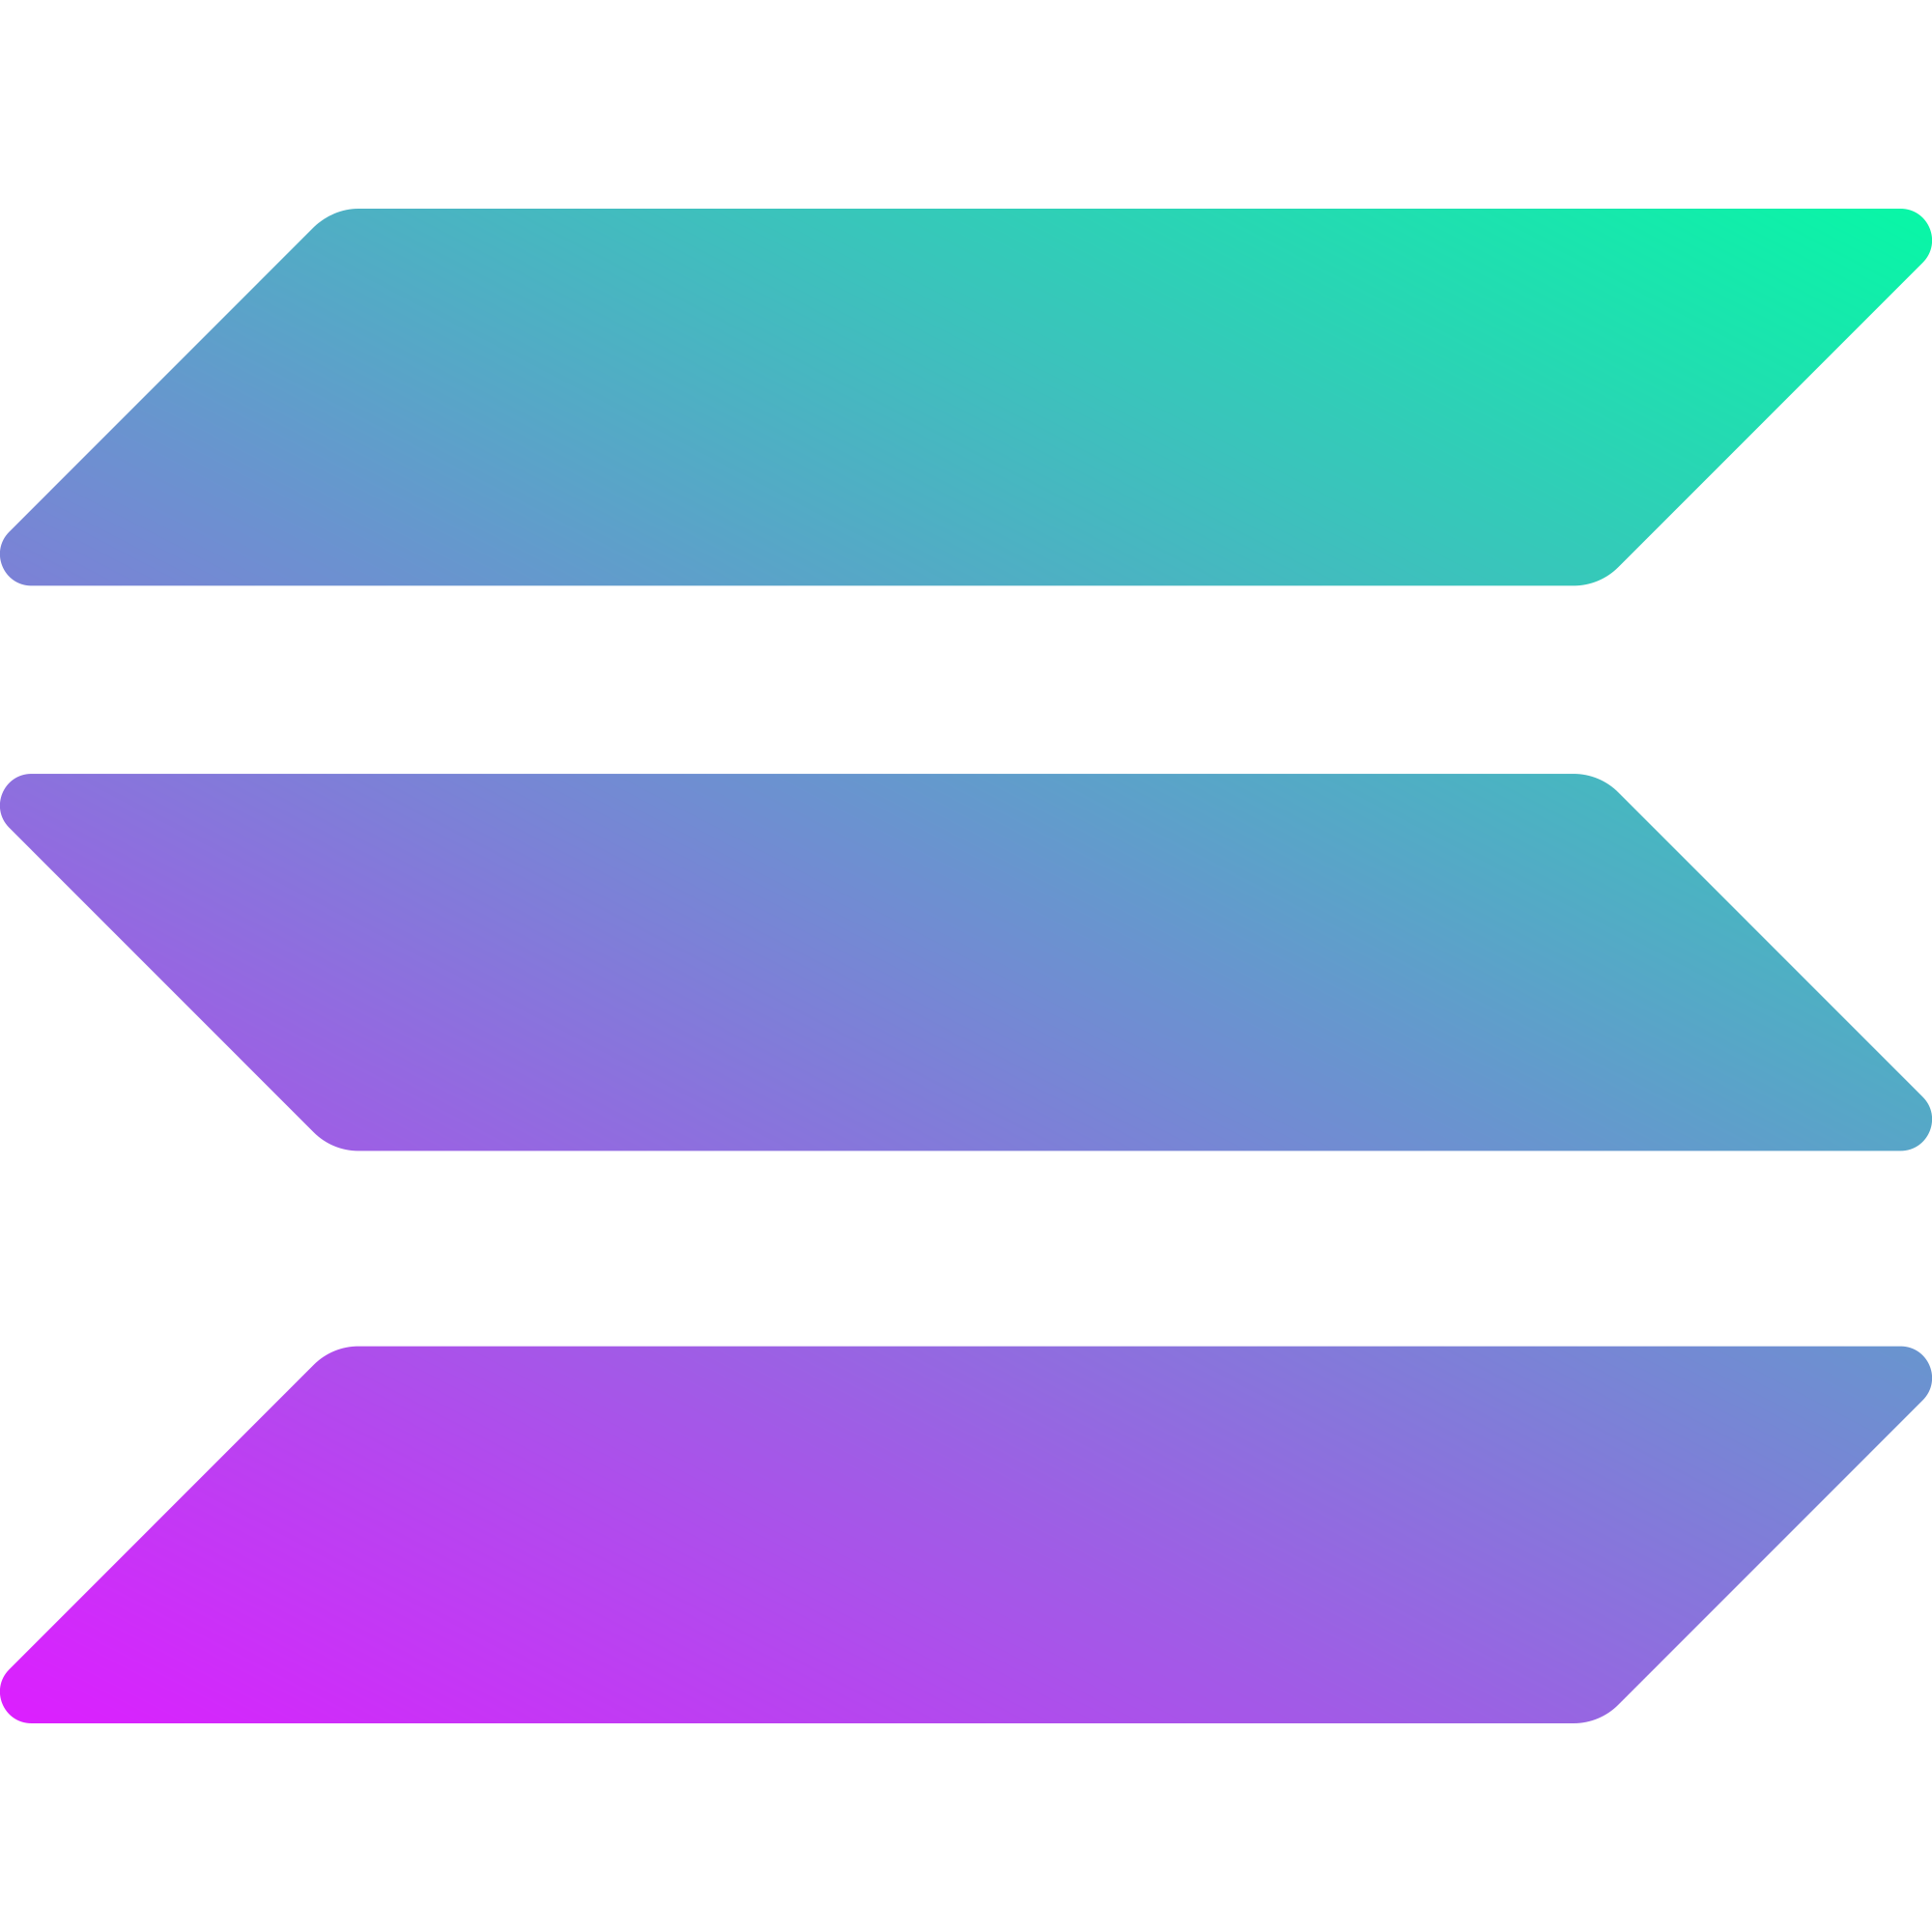 Solana logo symbolizing a blockchain platform.